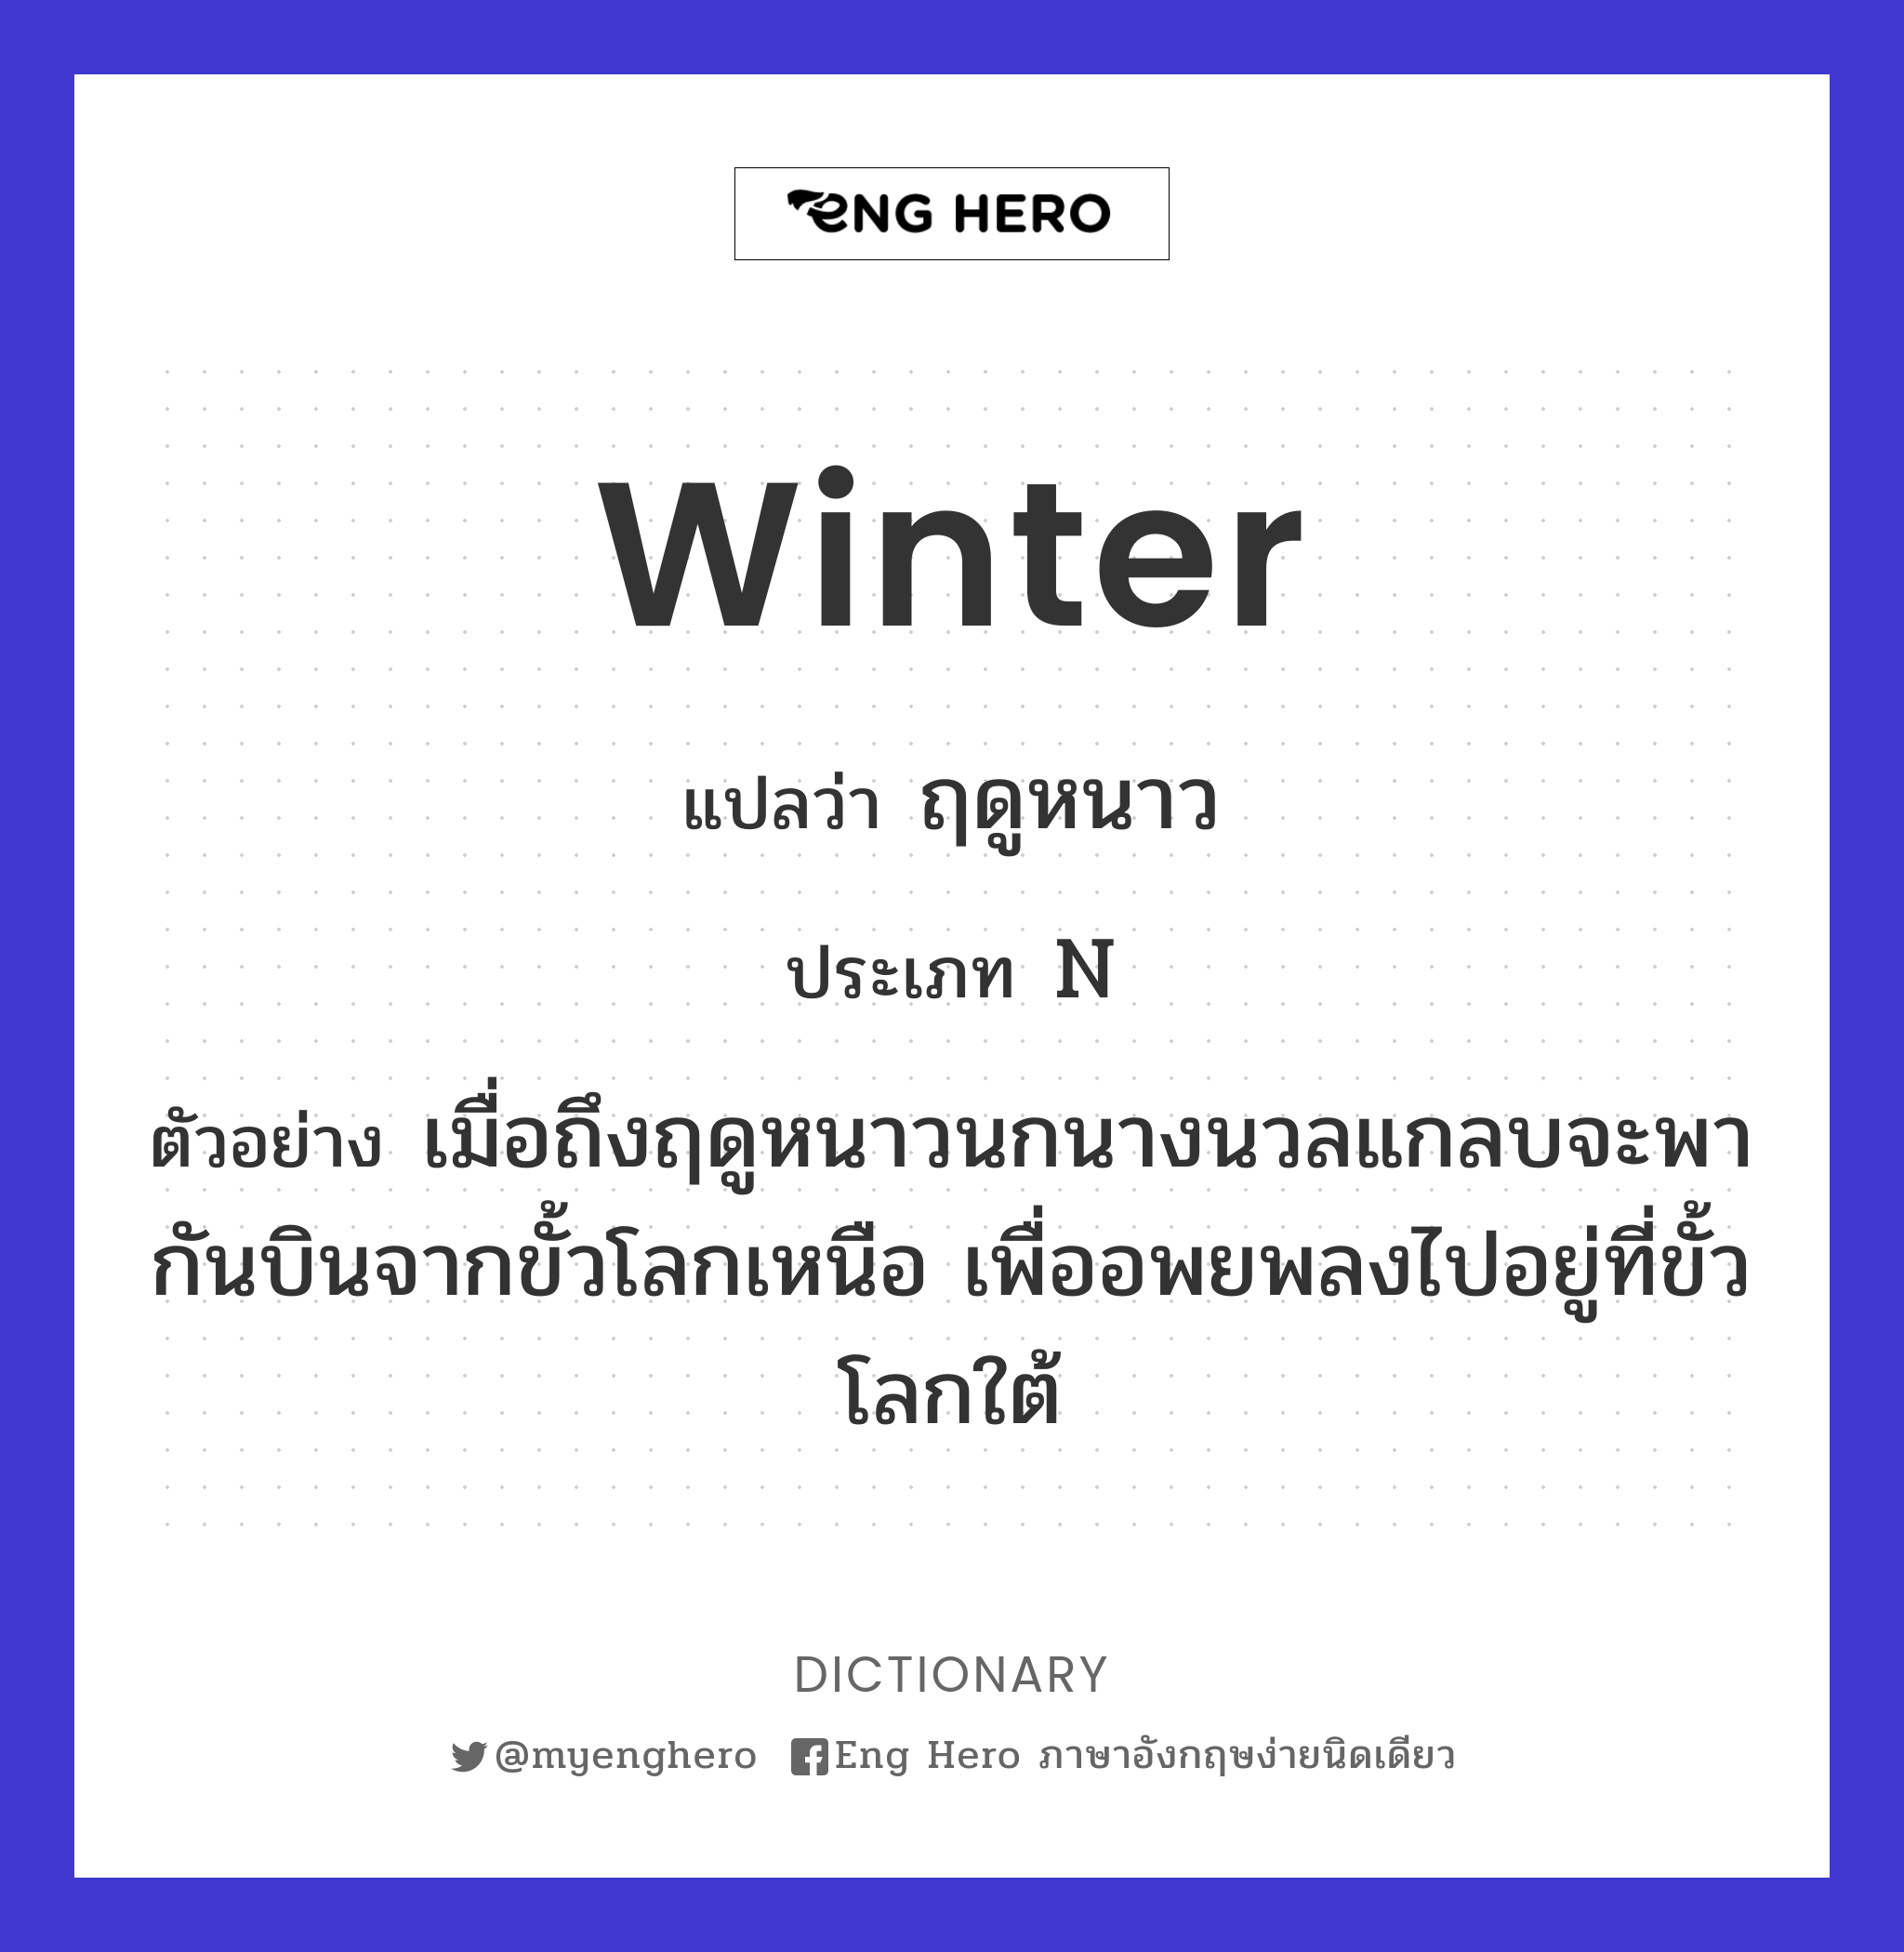 winter